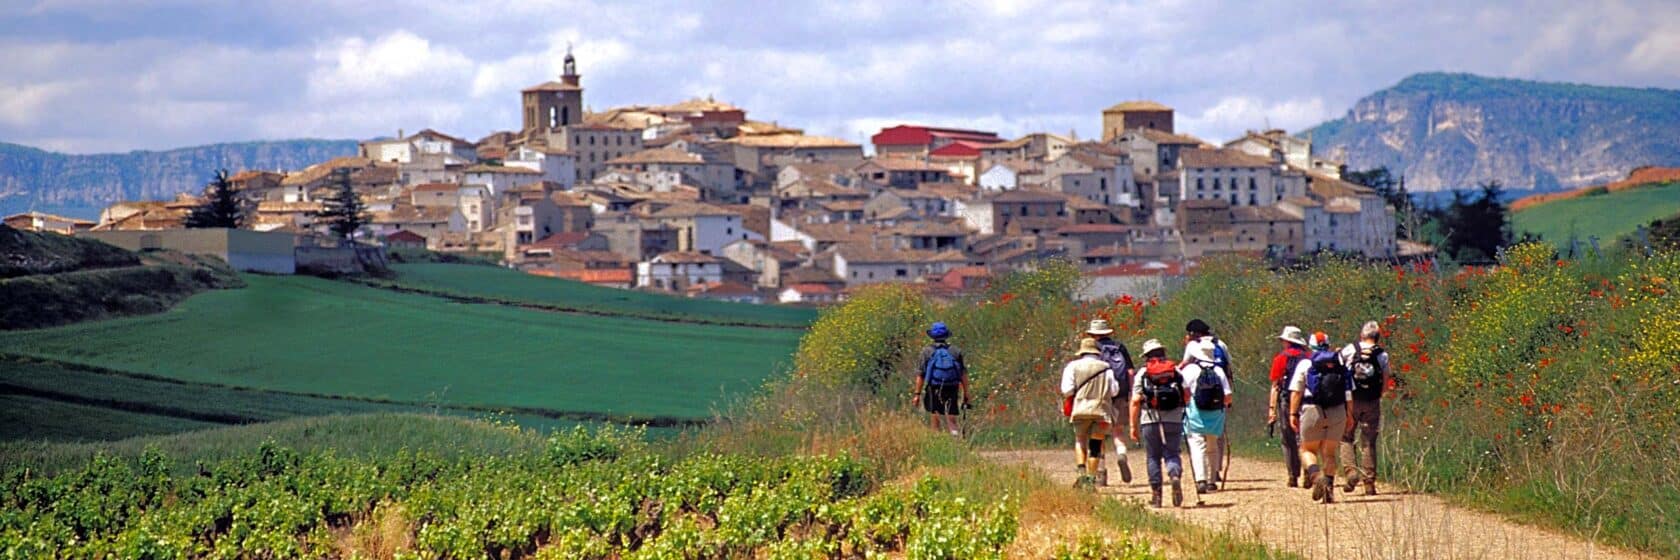 Spanish town along camino de santiago group of walkers.